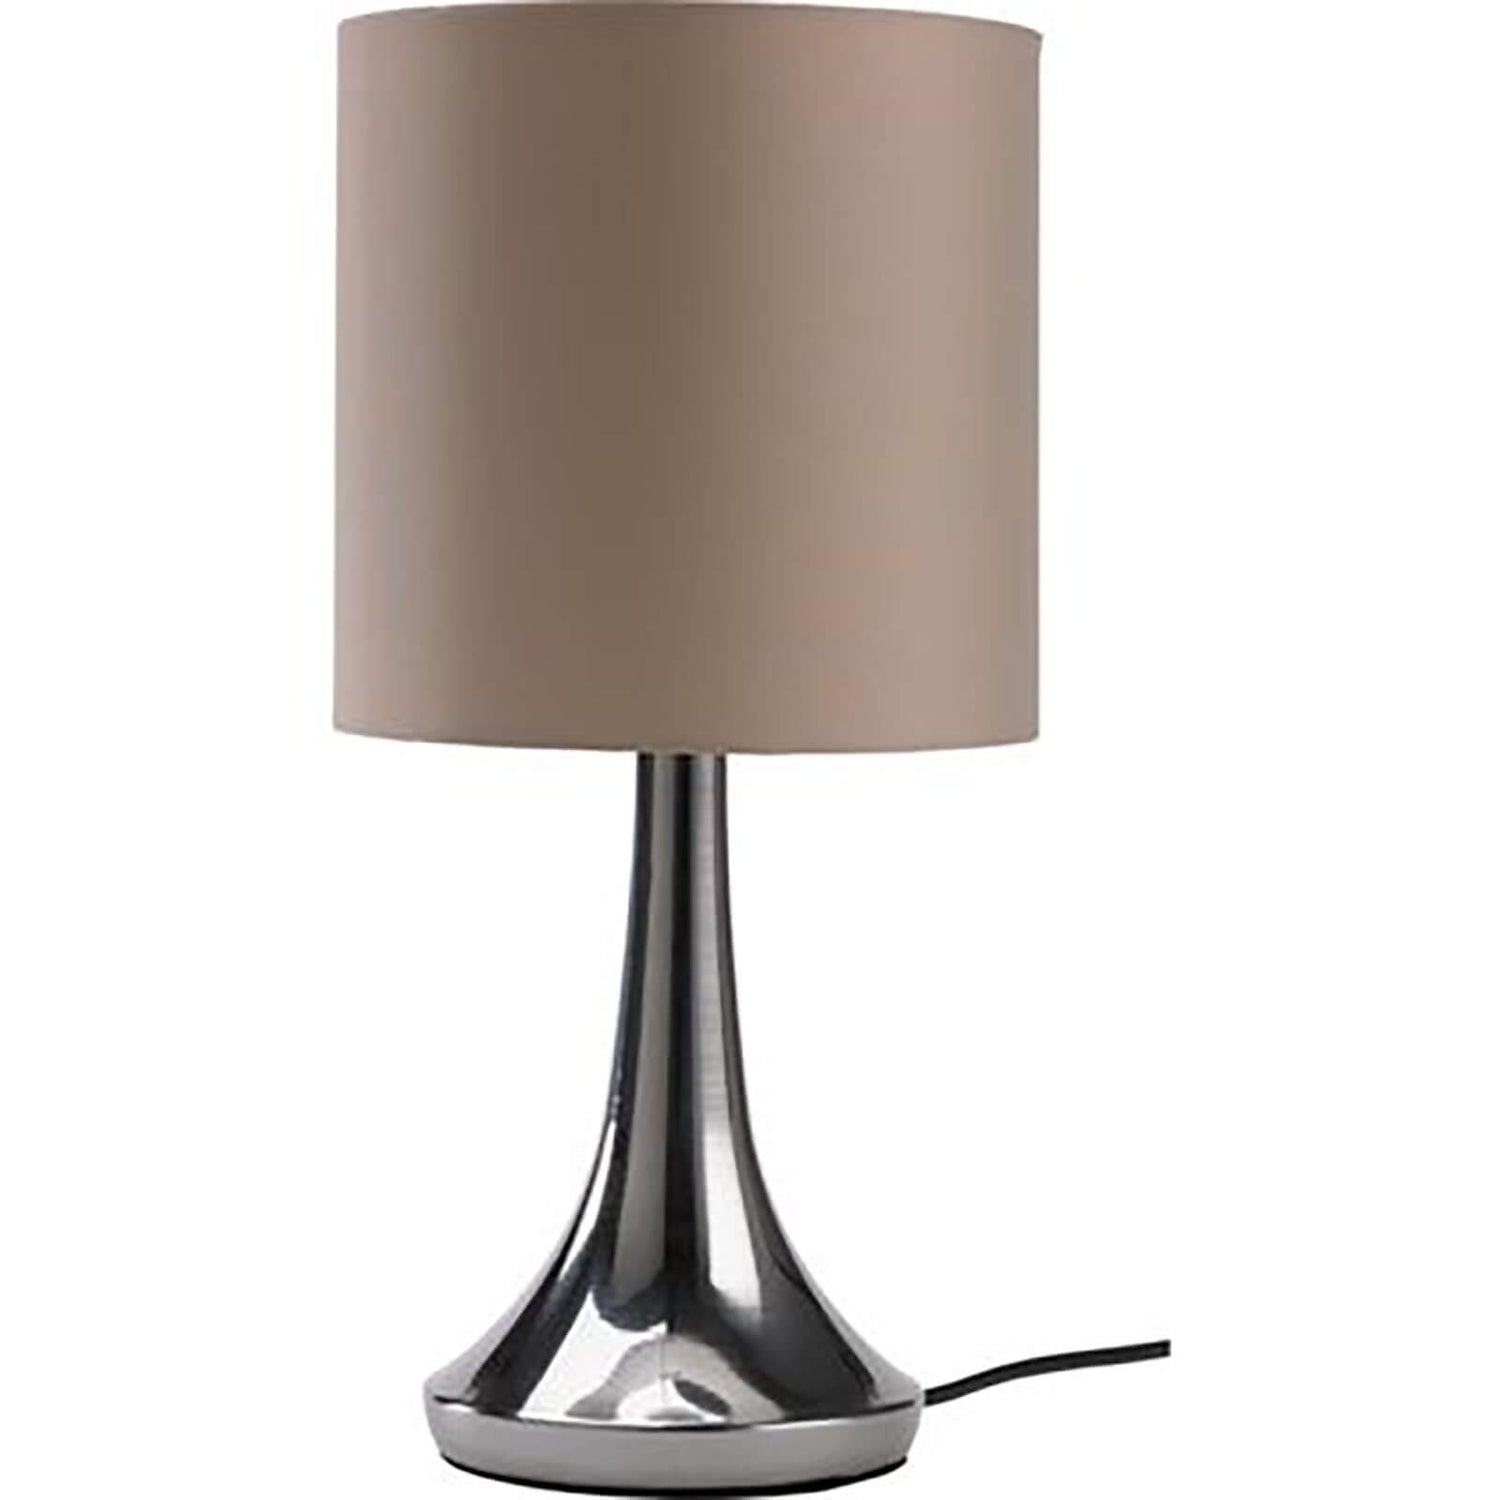 Touch Lamp Mocha Homebase, Mocha Metal Table Lamp With Cream Shade